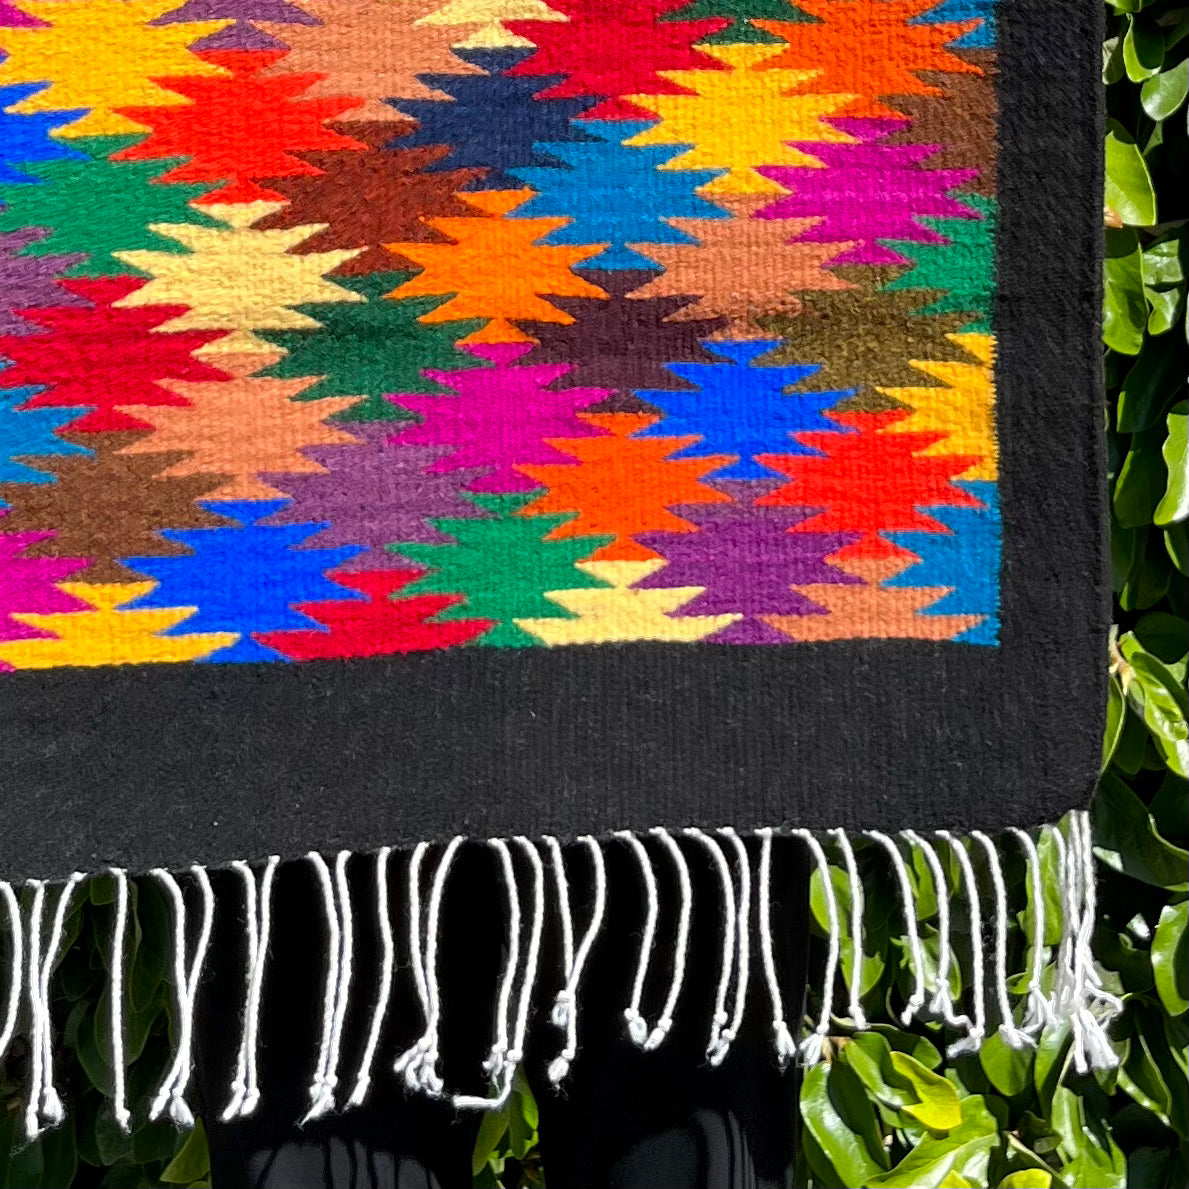 The Zapotec Weavers Million Stars Rug